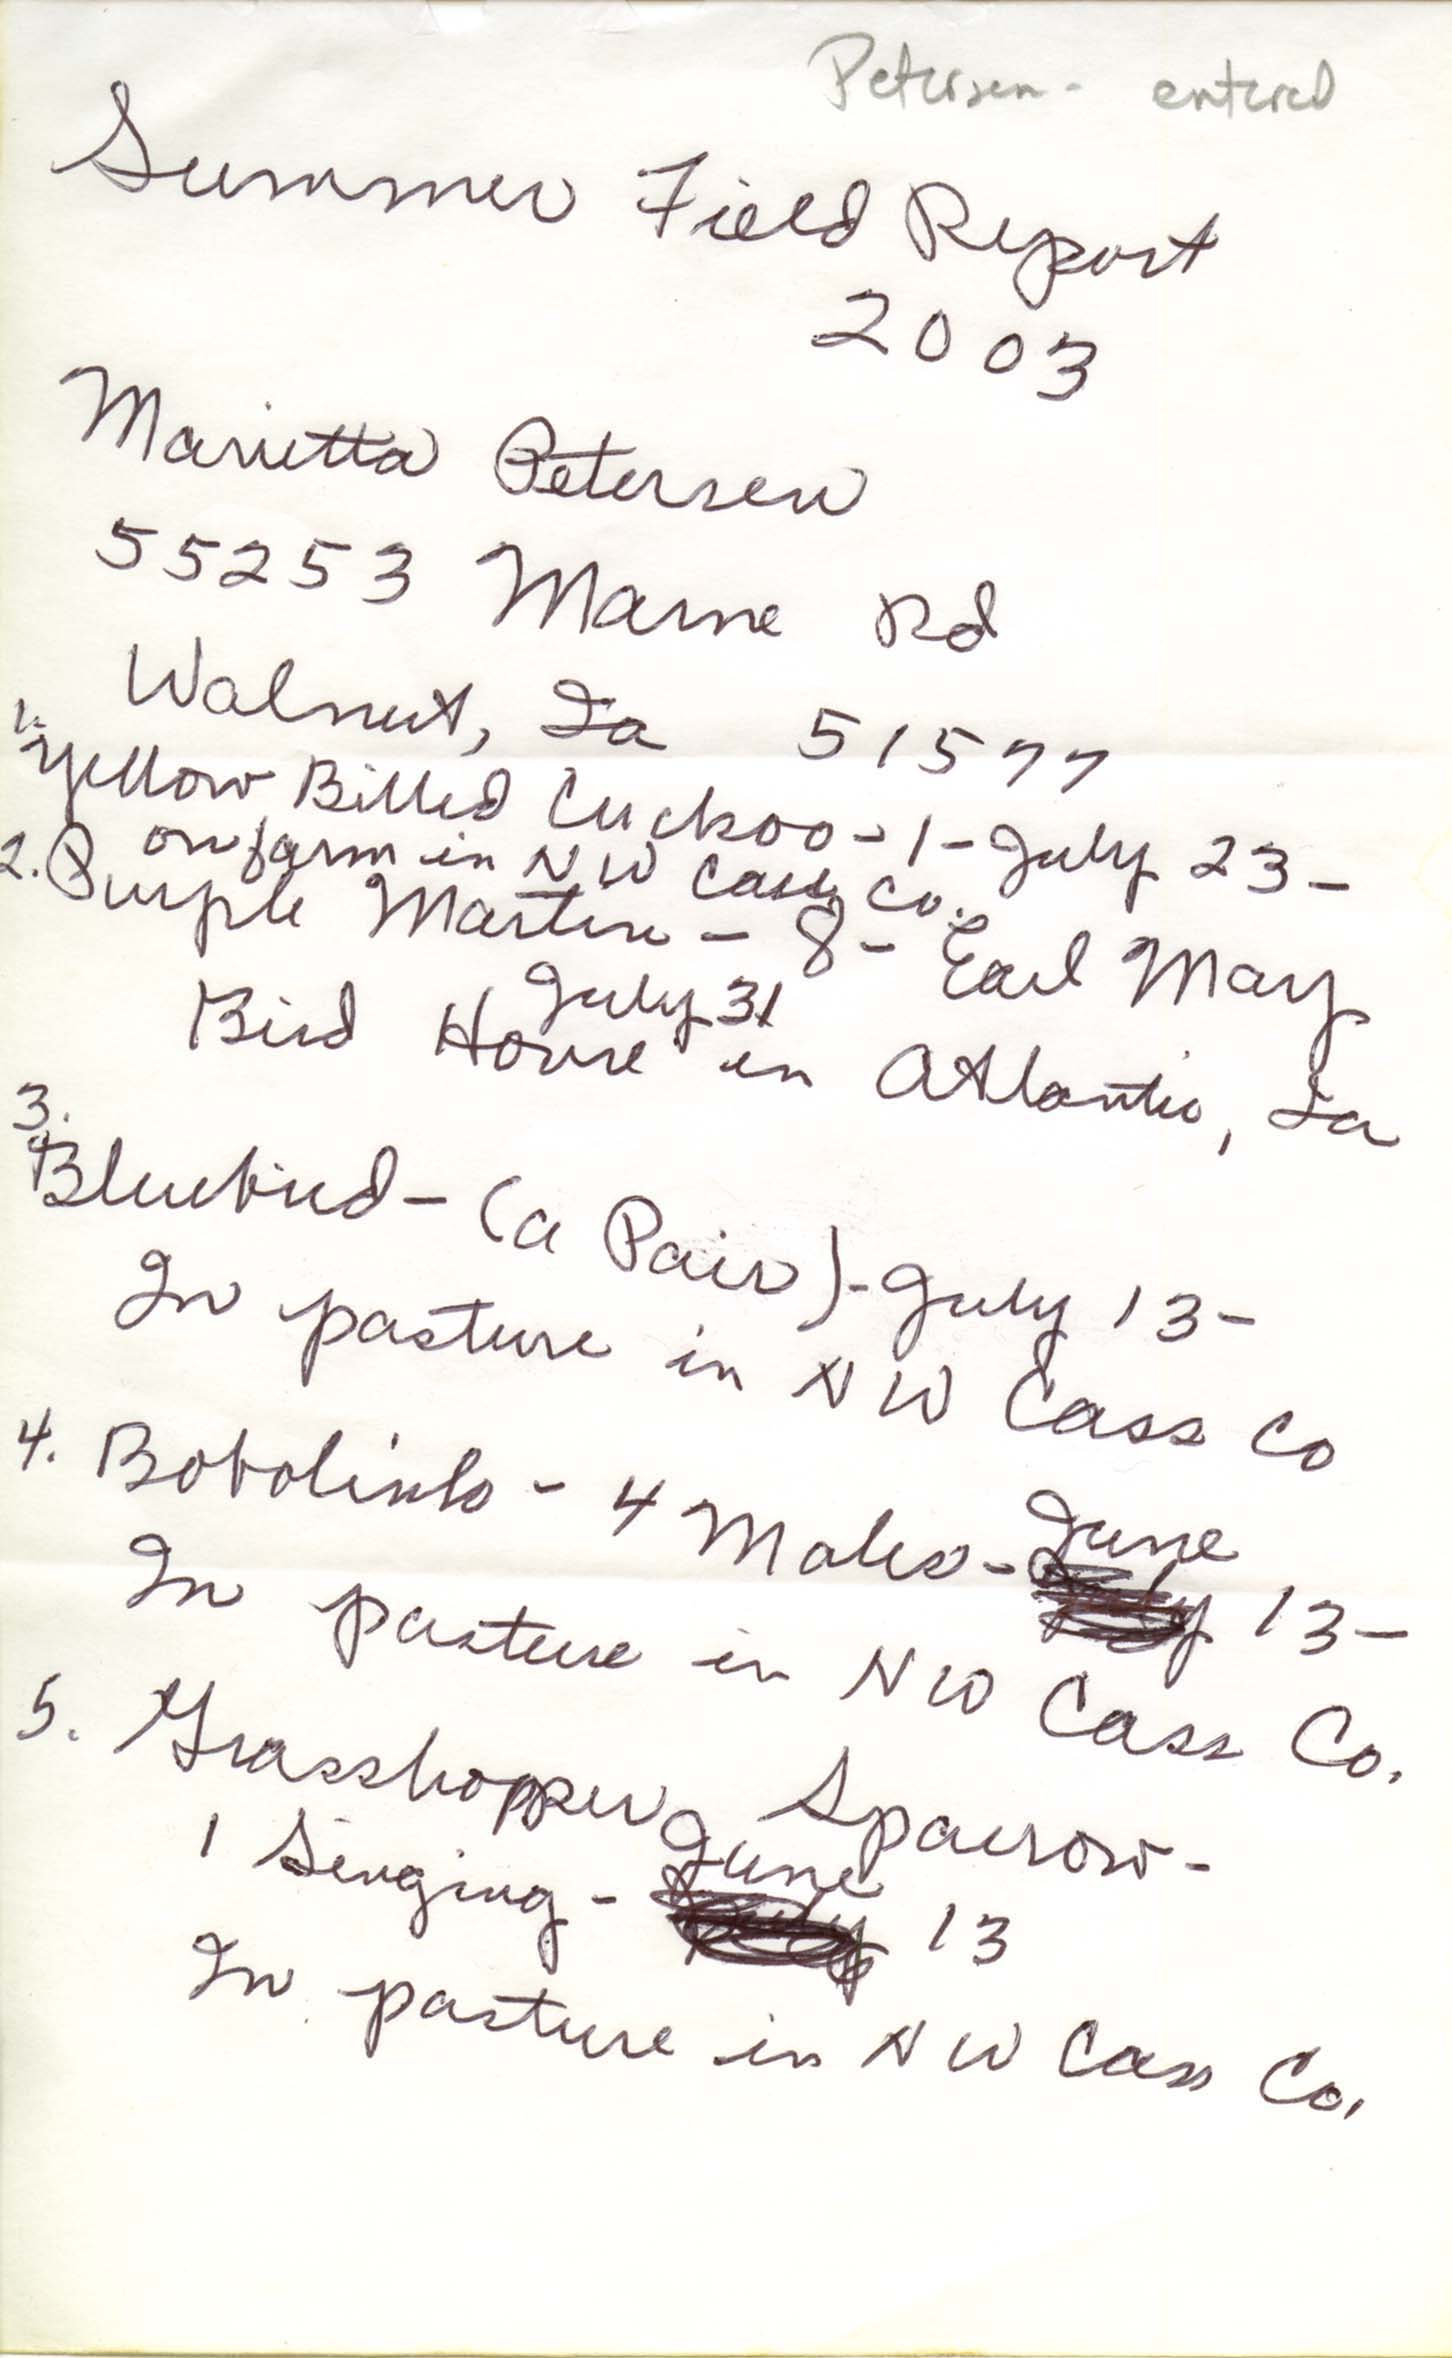 Field notes contributed by Marietta Petersen, summer 2003